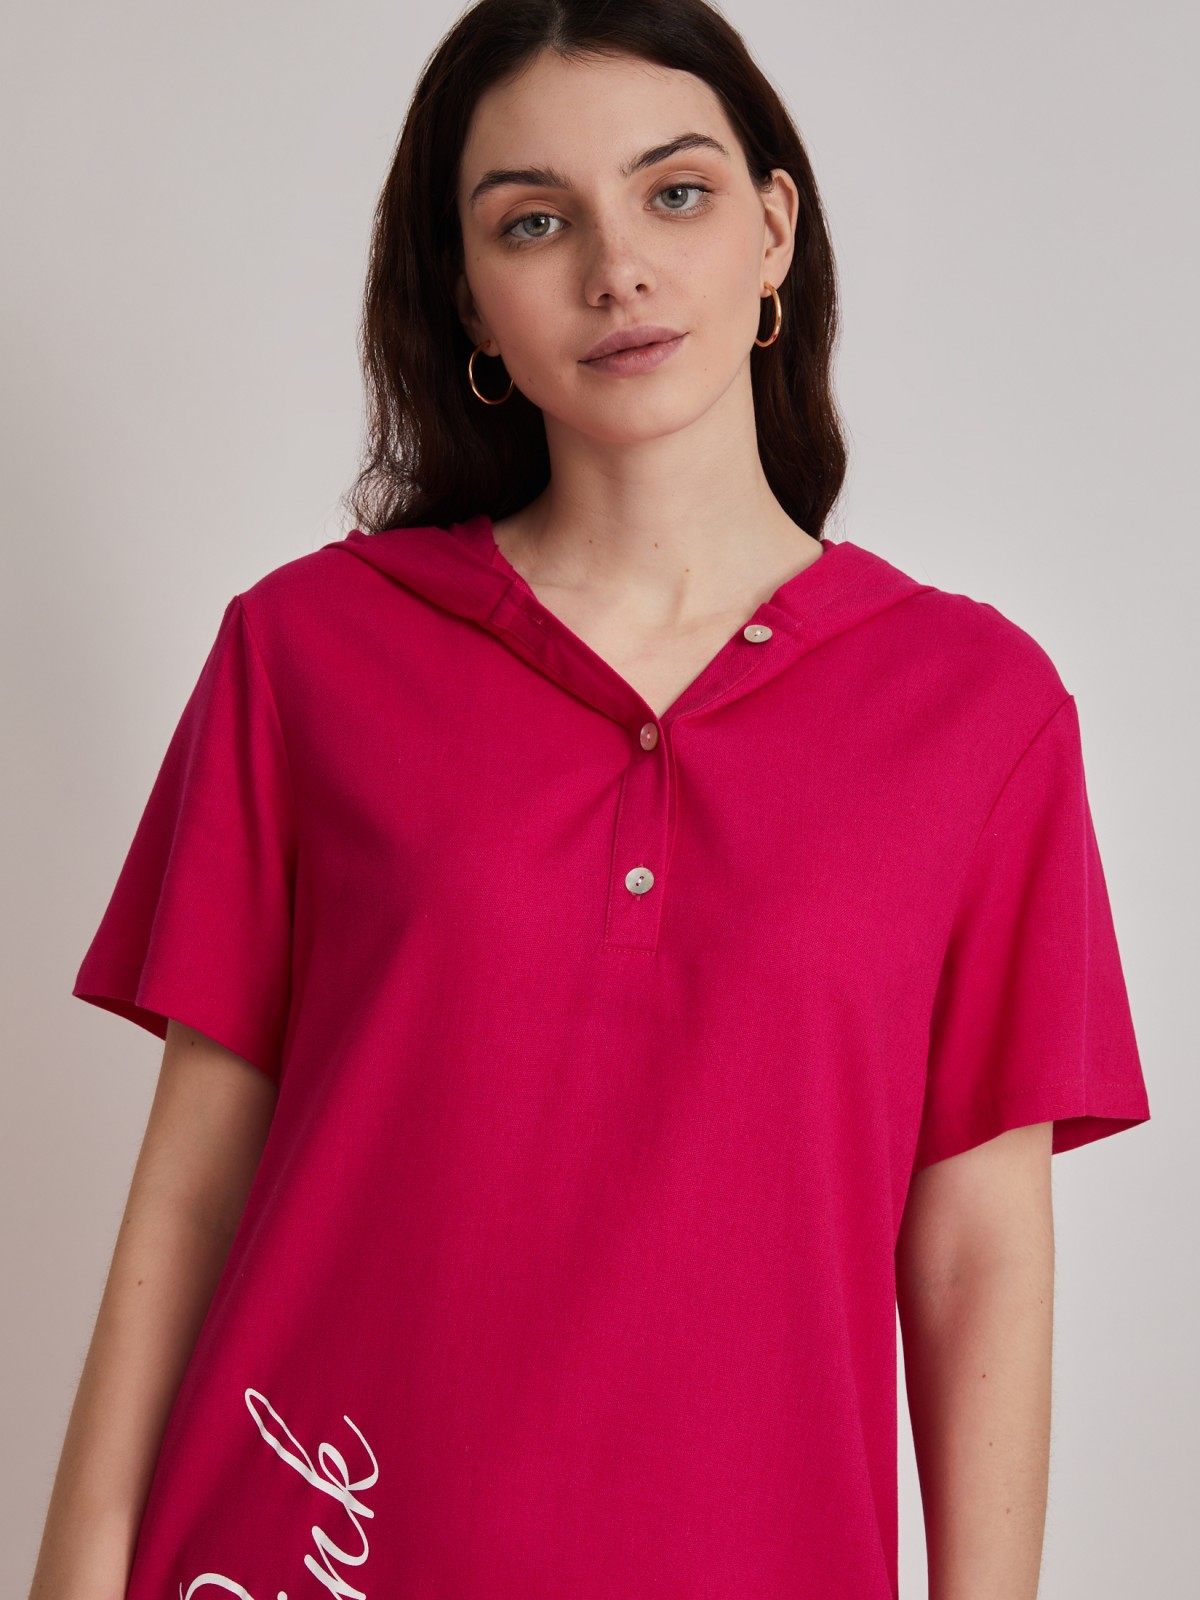 Платье-футболка из льна с капюшоном zolla 223238262101, цвет фуксия, размер XS - фото 5